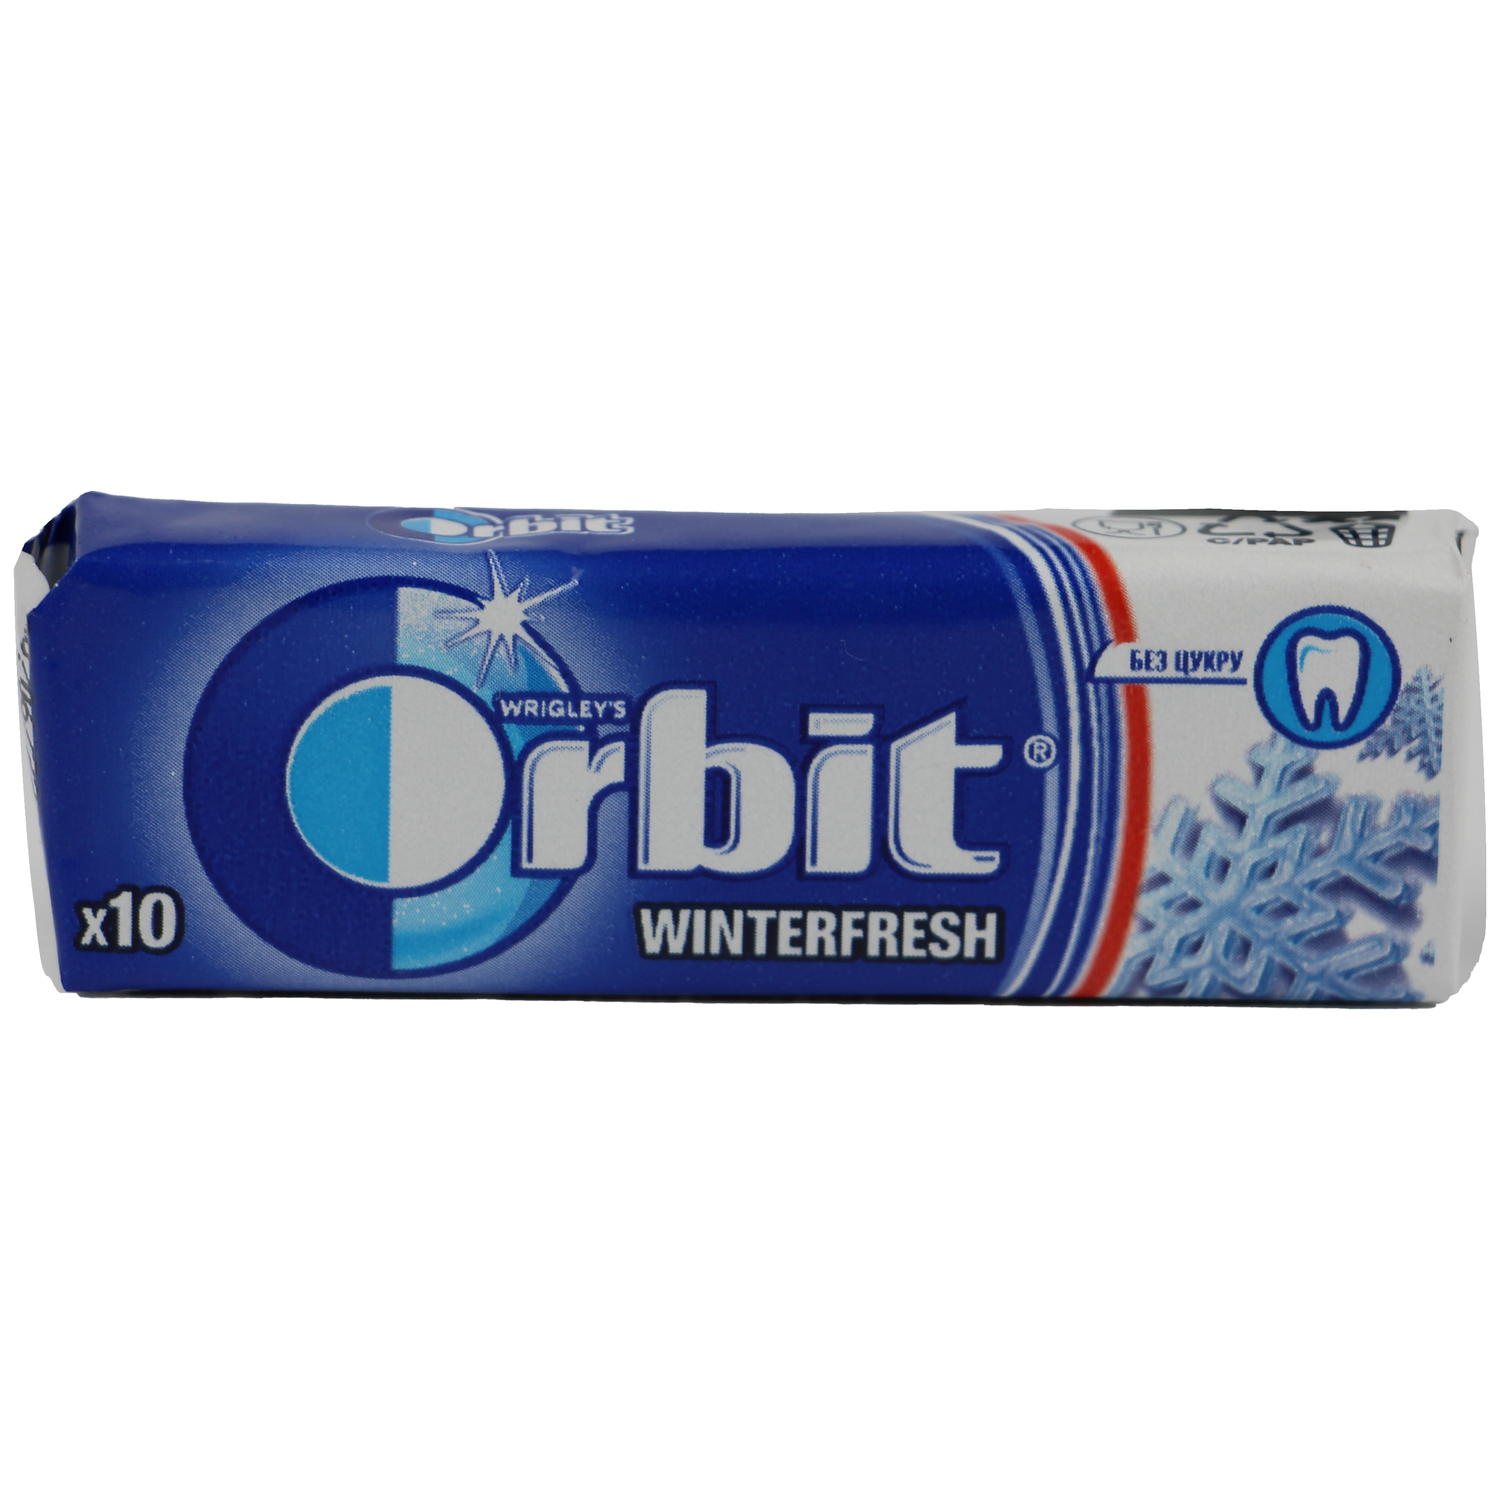 Orbit Winterfresh Sugar-Free Chewing Gum With Menthol Flavor 13.6g